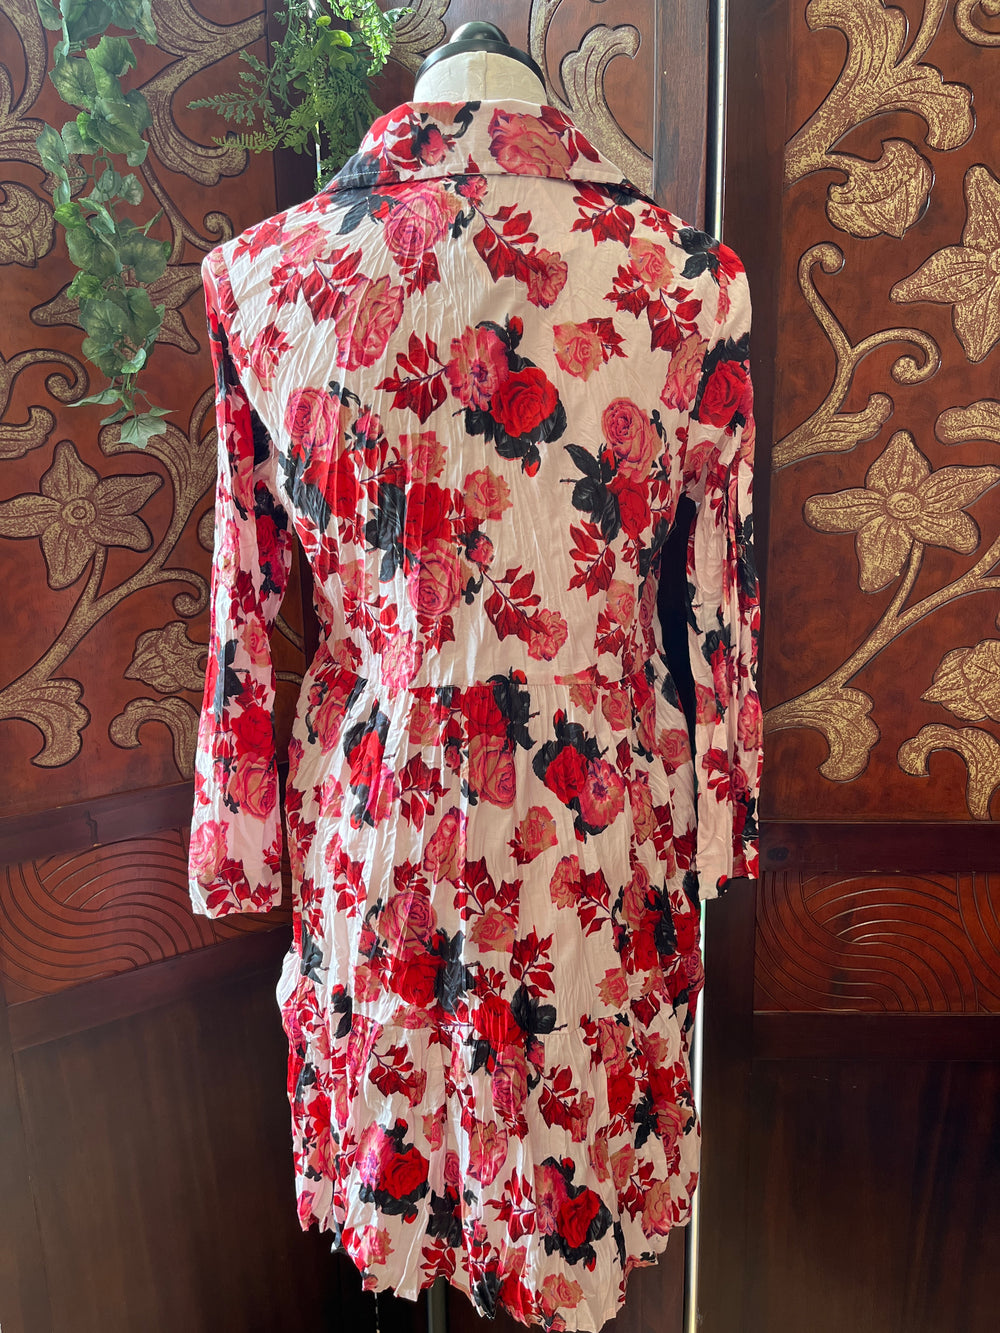 Dress Addict Lilas dress, organic cotton